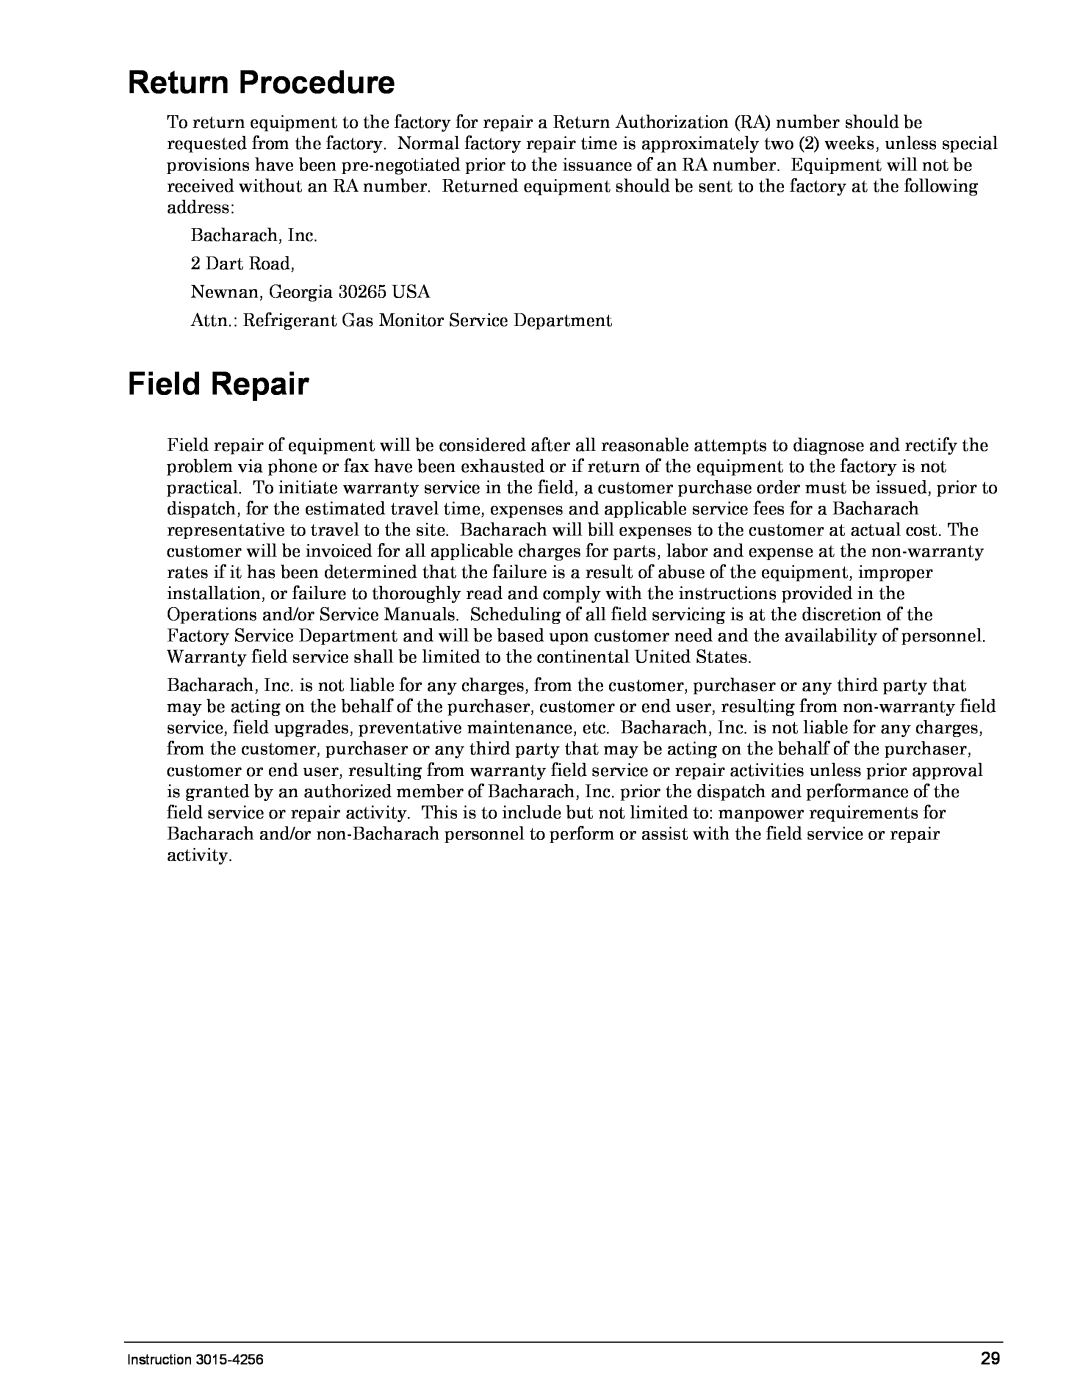 Bacharach 3015-4256 manual Return Procedure, Field Repair 